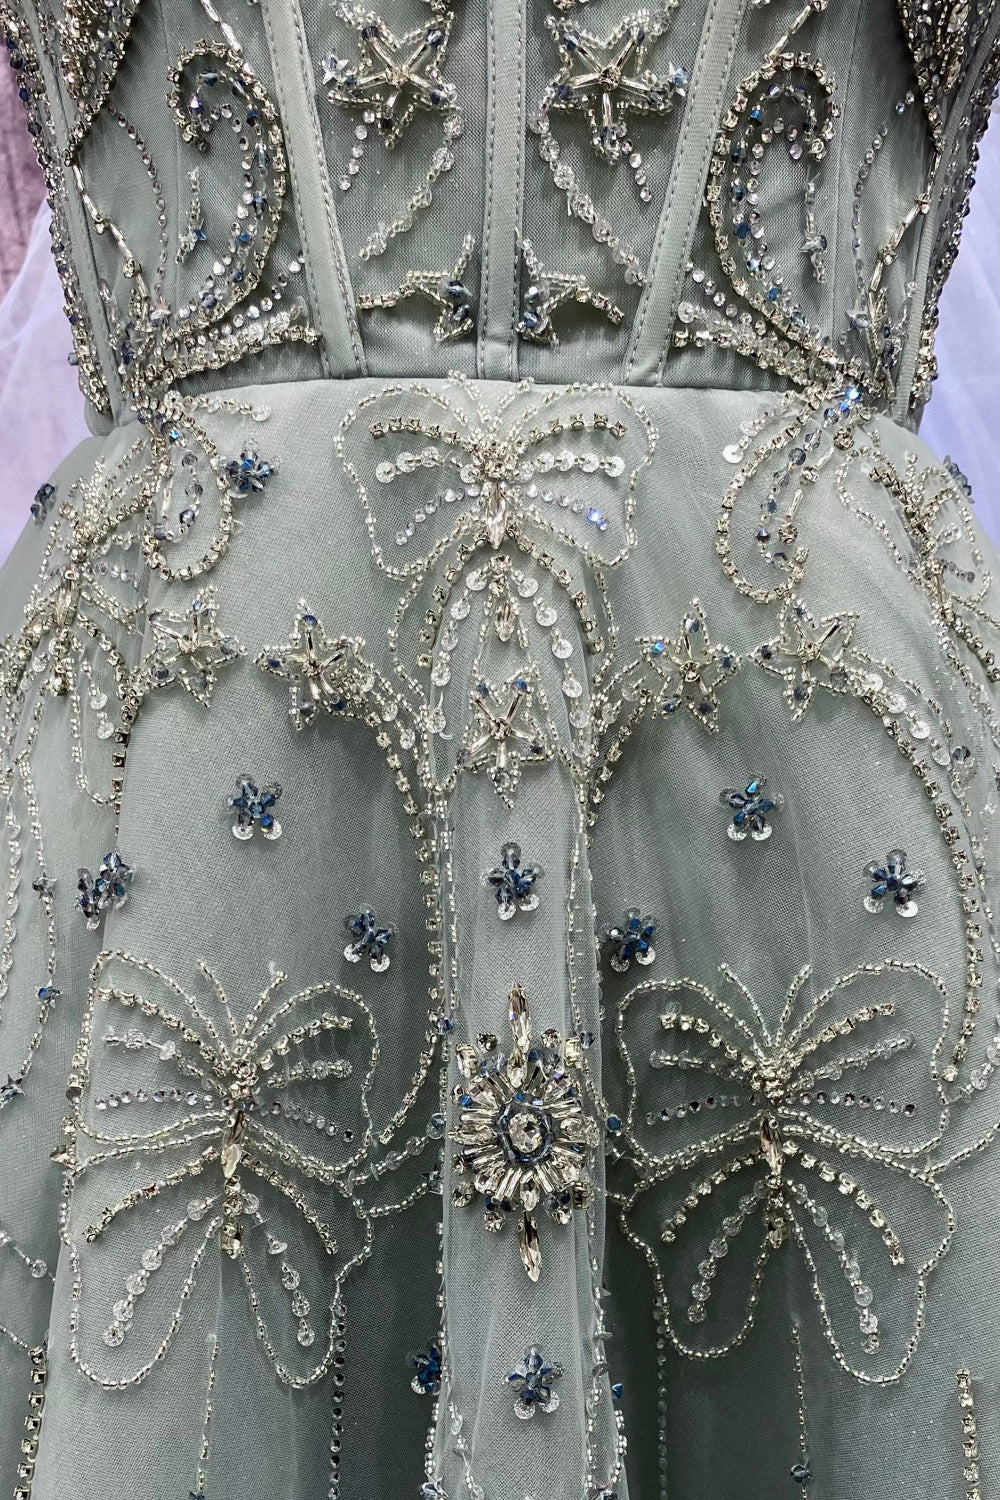 Ari Gown: Luxury Embroidery, Corset Back, Sequin Bodice, Boho Princess, Appliquéd Royal-smcdress